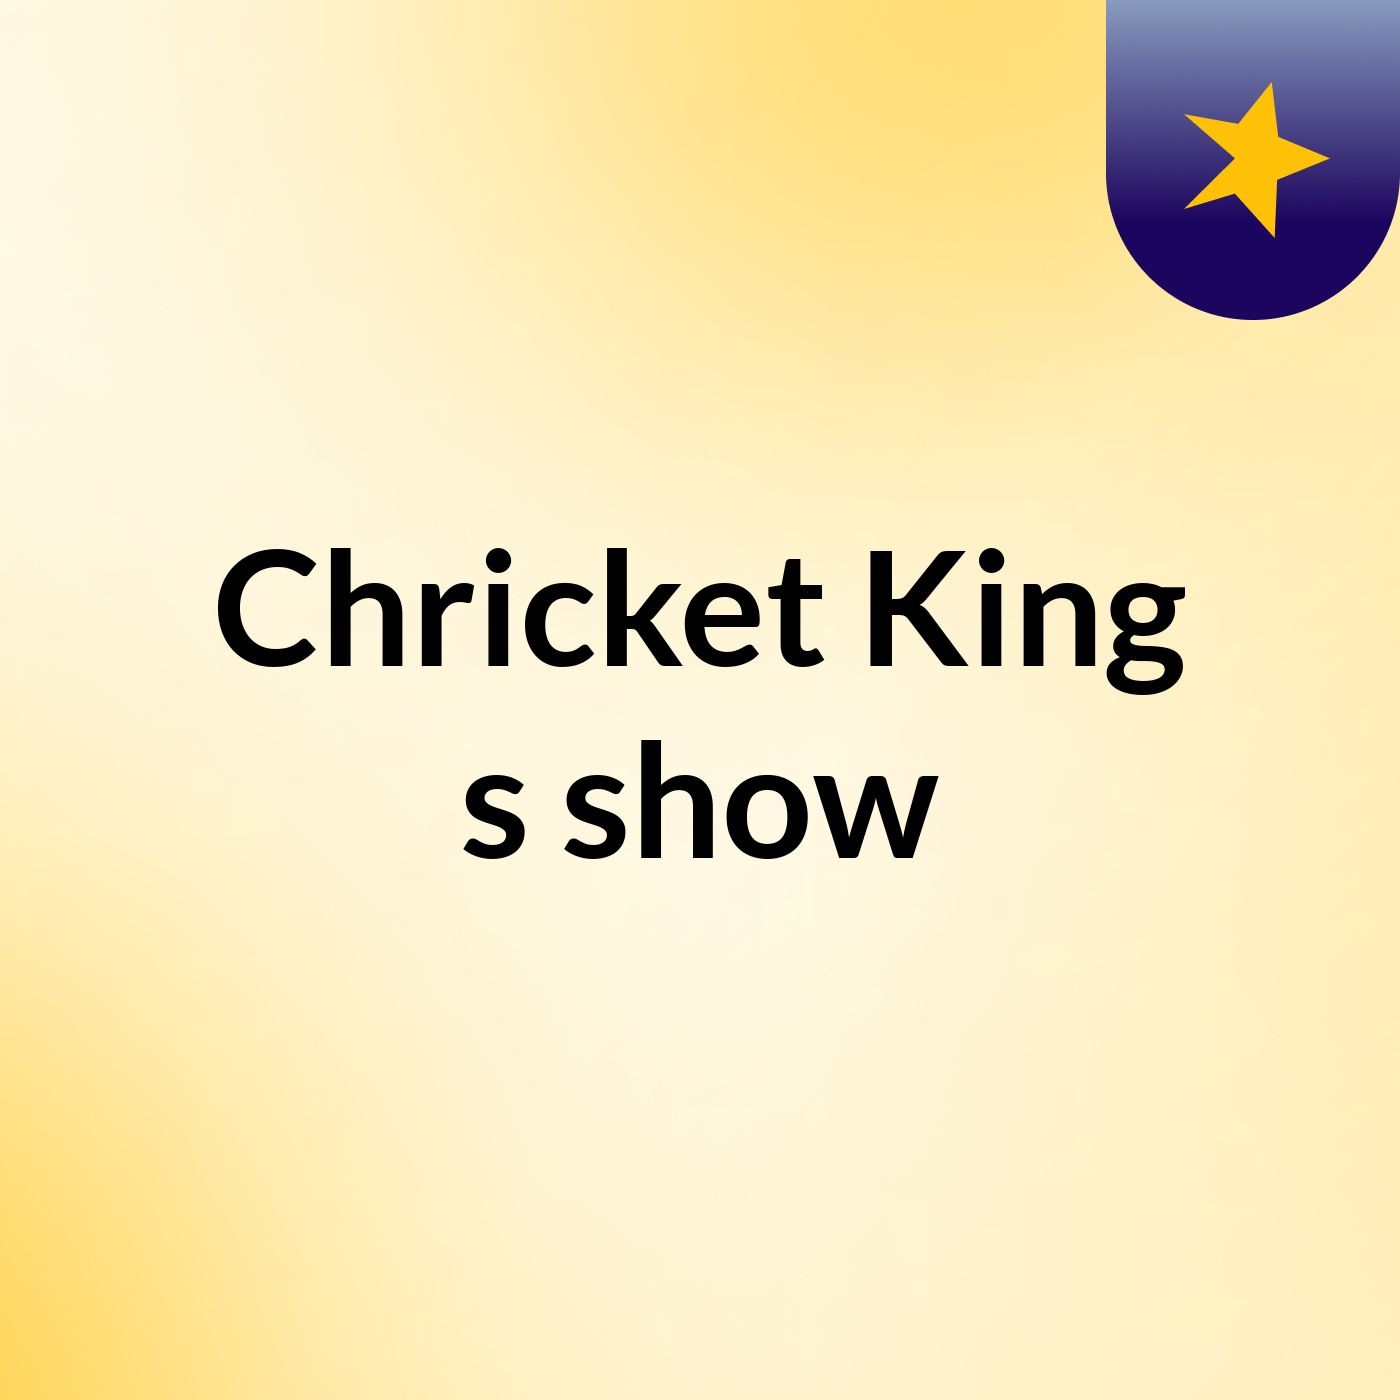 Episode 1 - Chricket King's show